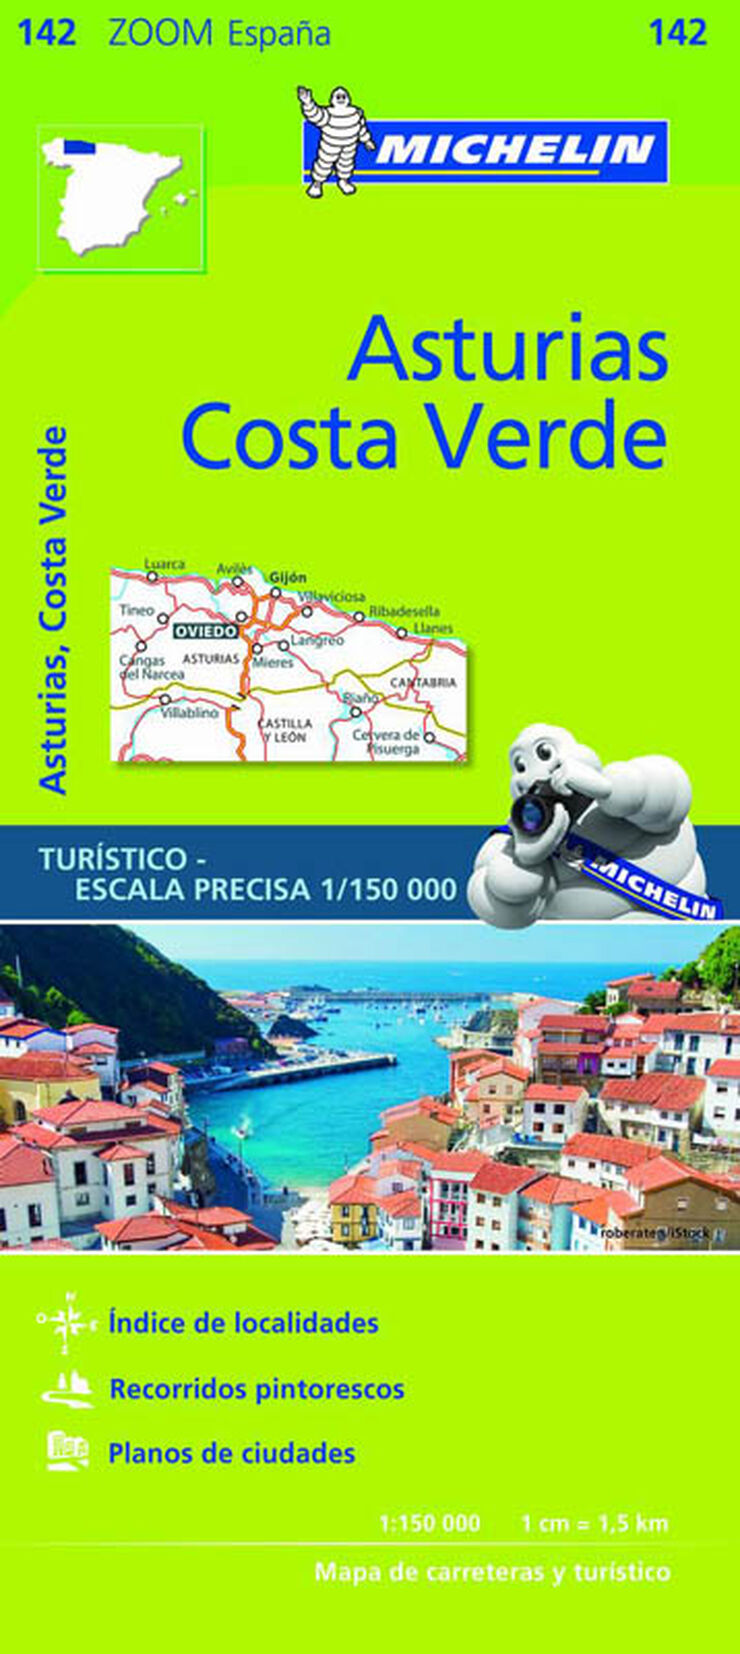 Asturias, Costa Verde